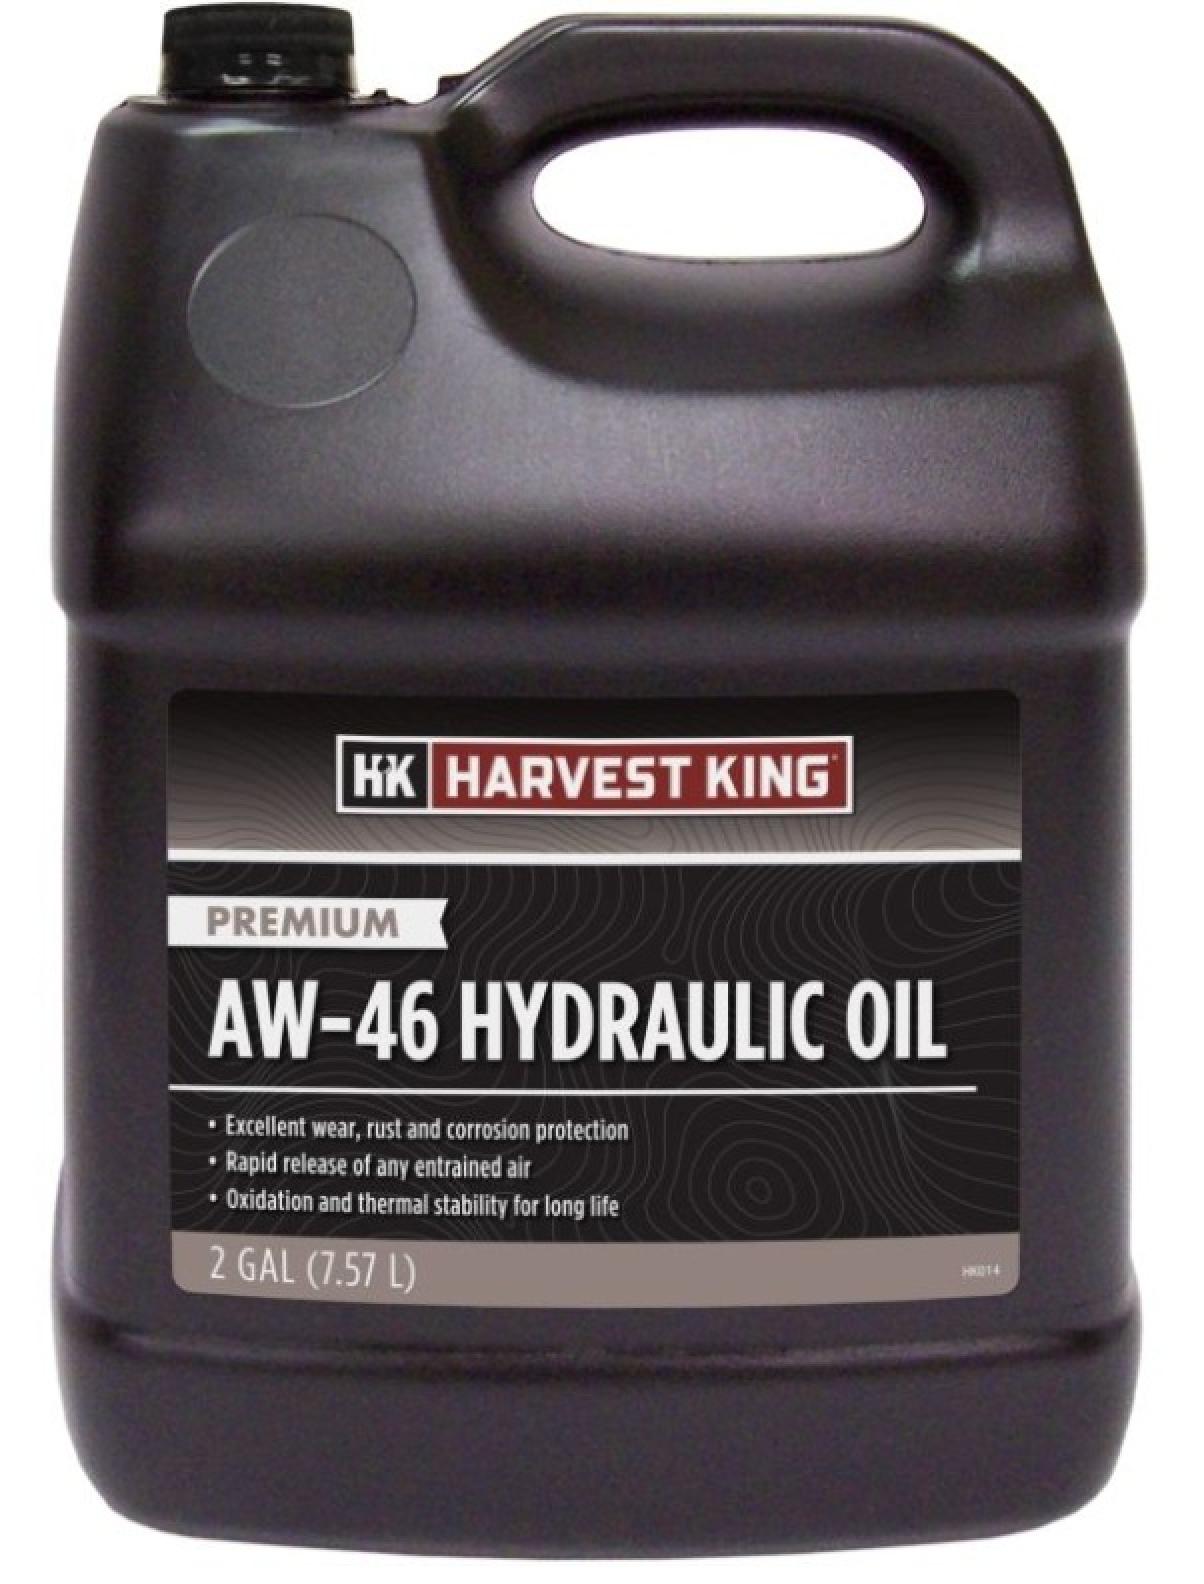 Harvest King Premium AW-46 Hydraulic Oil